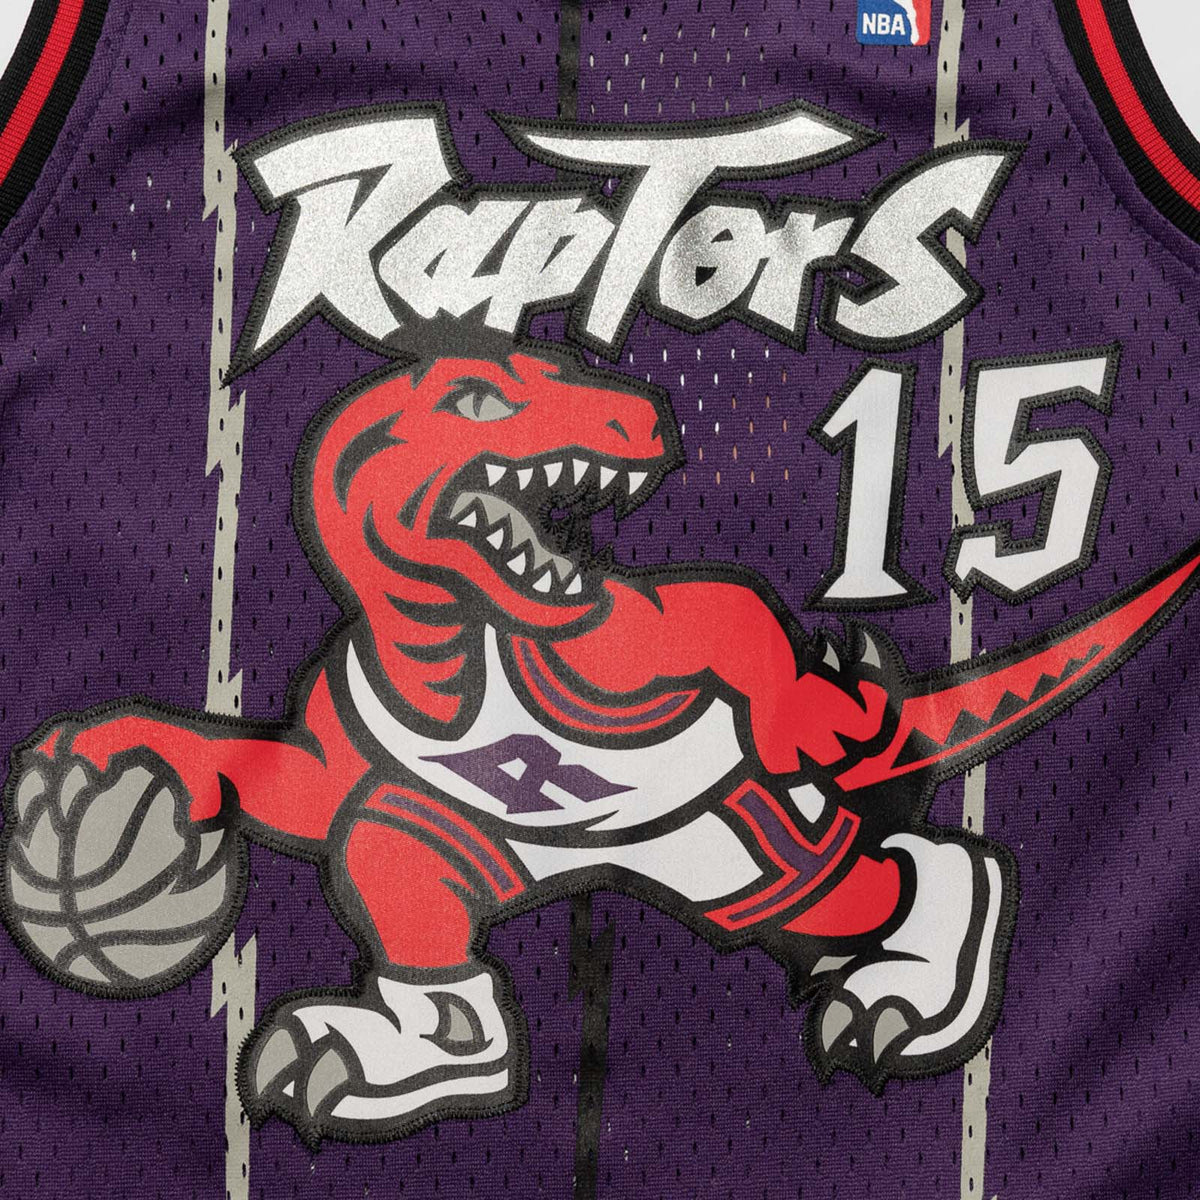 Authentic Vintage Nike NBA Toronto Raptors Vince Carter Basketball Jersey